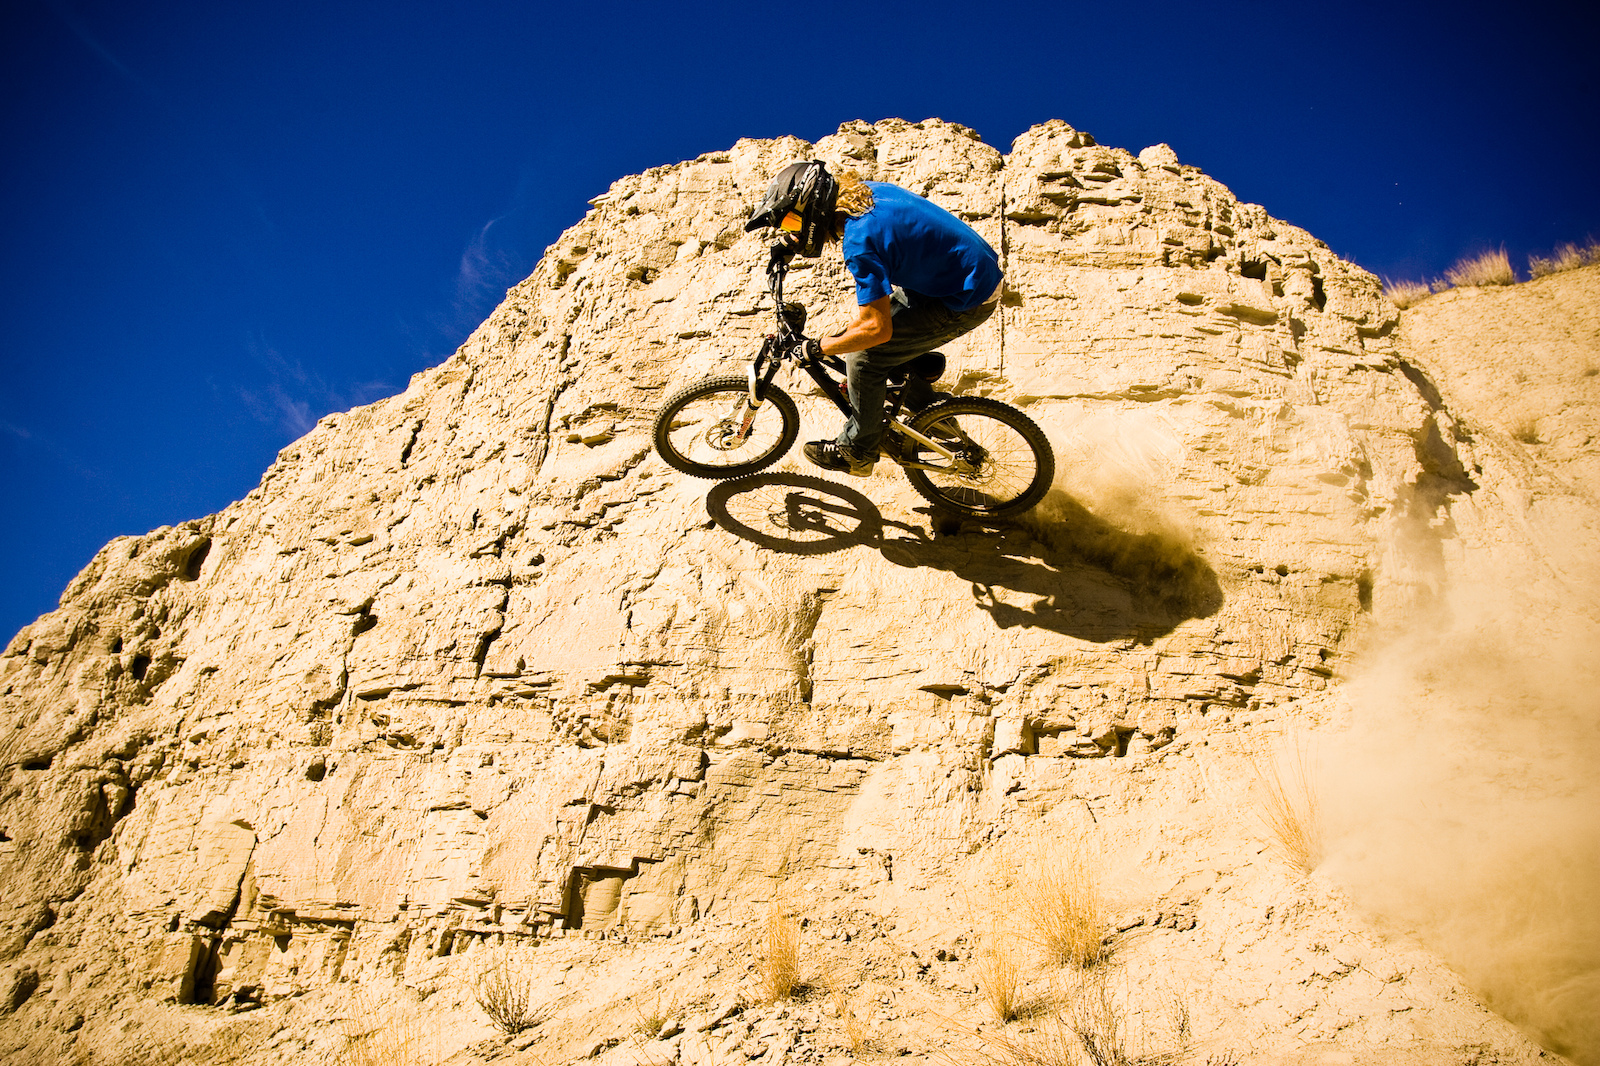 Kelly McGarry rides a natural rock wallride on his mountain bike in Kamloops BC Canada Photo Dan Barham